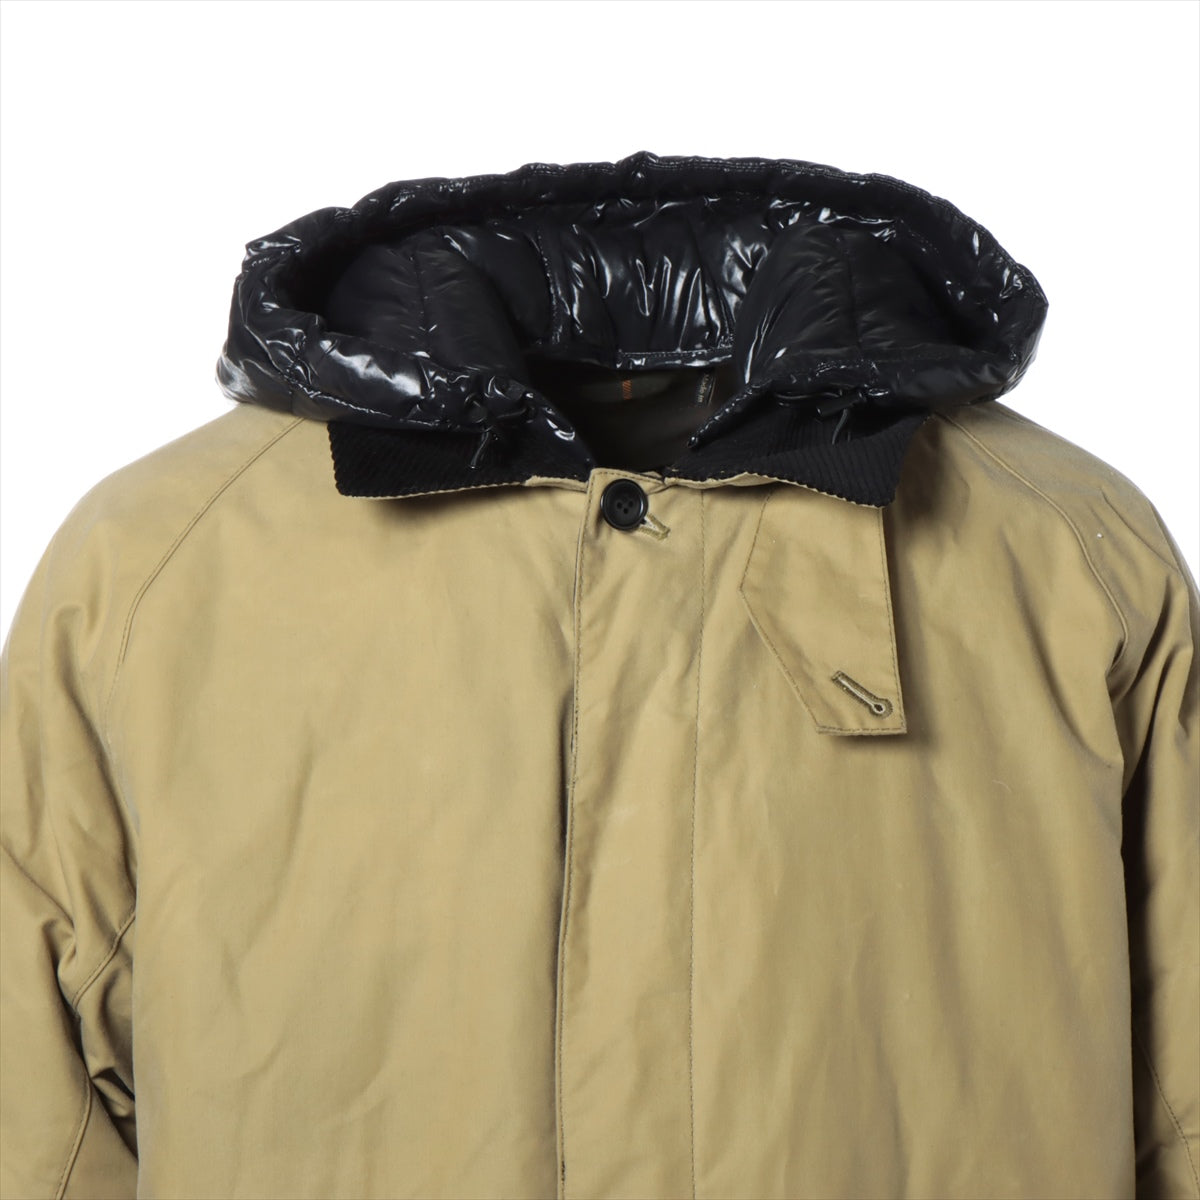 Moncler Genius 1952 x Babur 22 years Cotton & Polyester Down coat XL Men's Black x khaki  H20921B00002 BARRA waxy Down is detachable